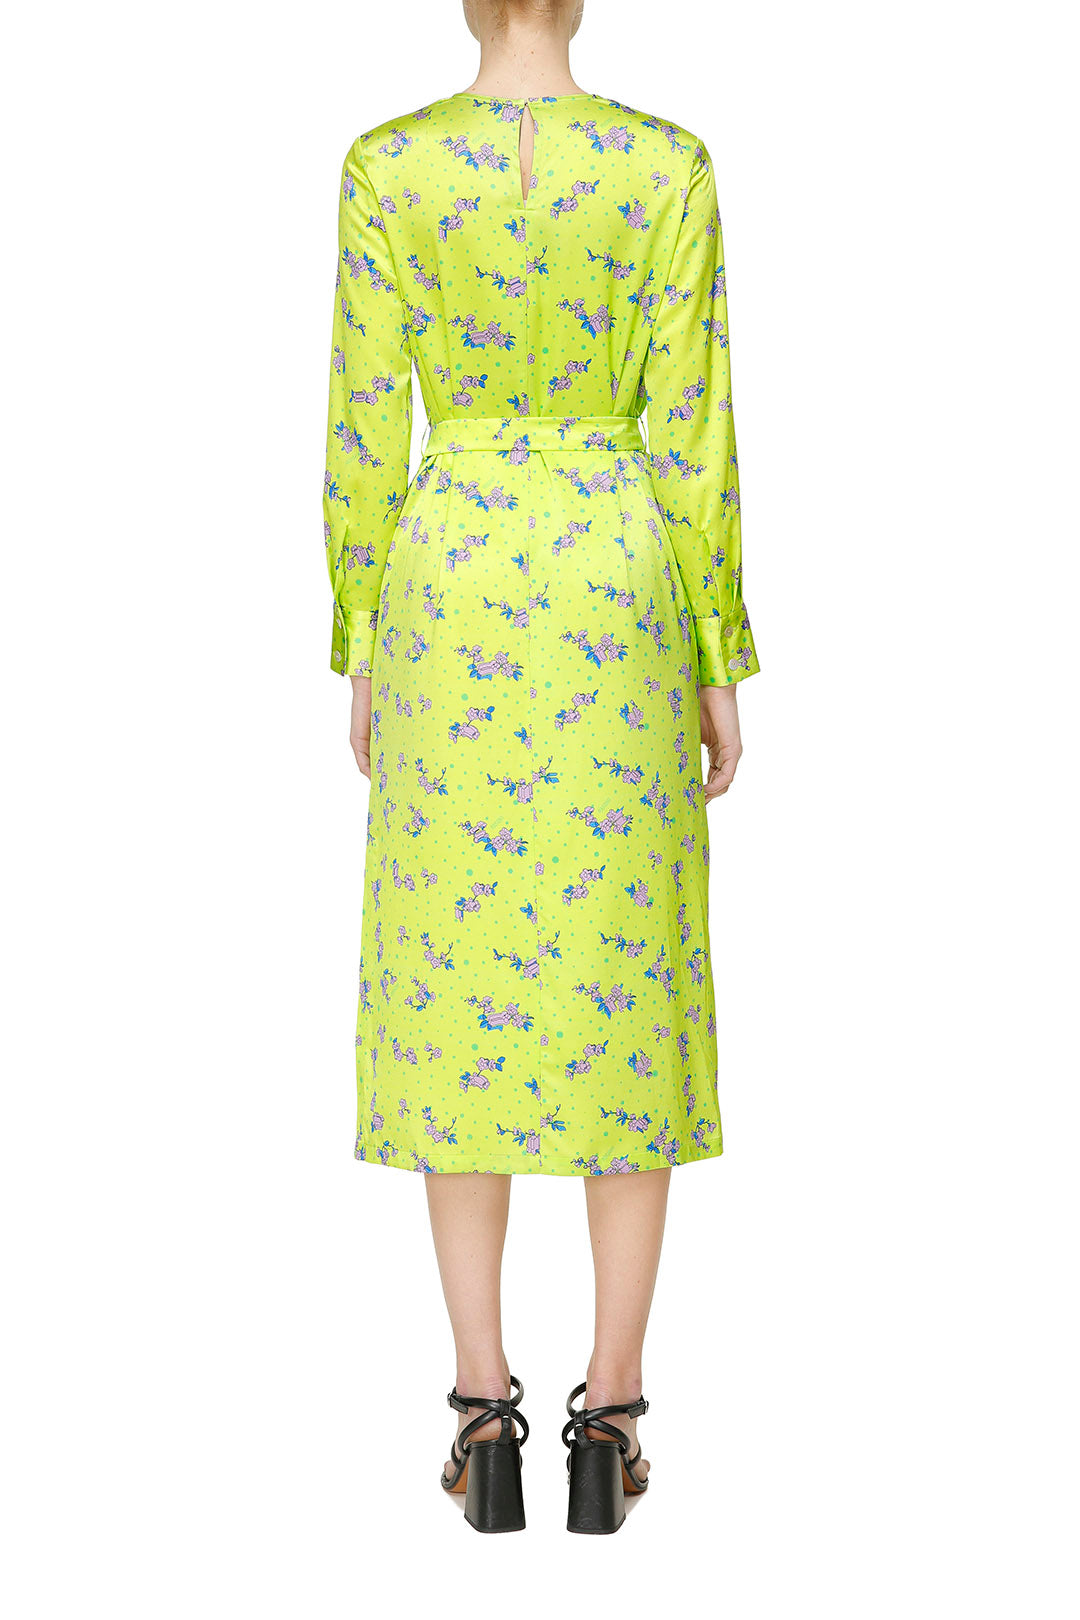 Lime silk printed dress